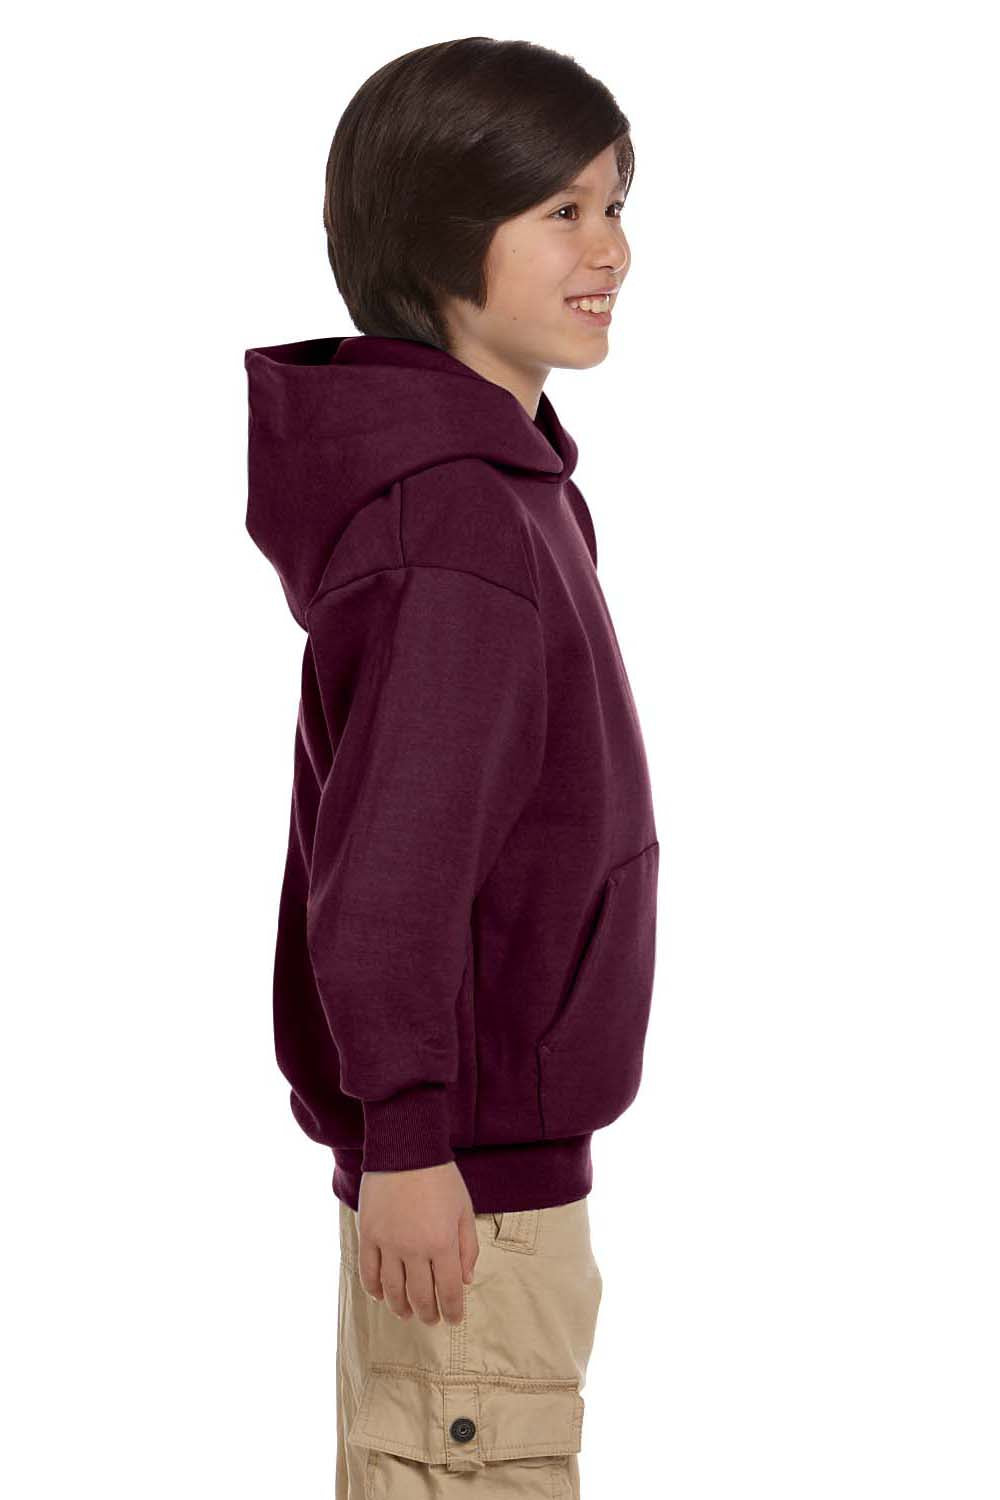 Hanes P473 Youth EcoSmart Print Pro XP Hooded Sweatshirt Hoodie Maroon Side